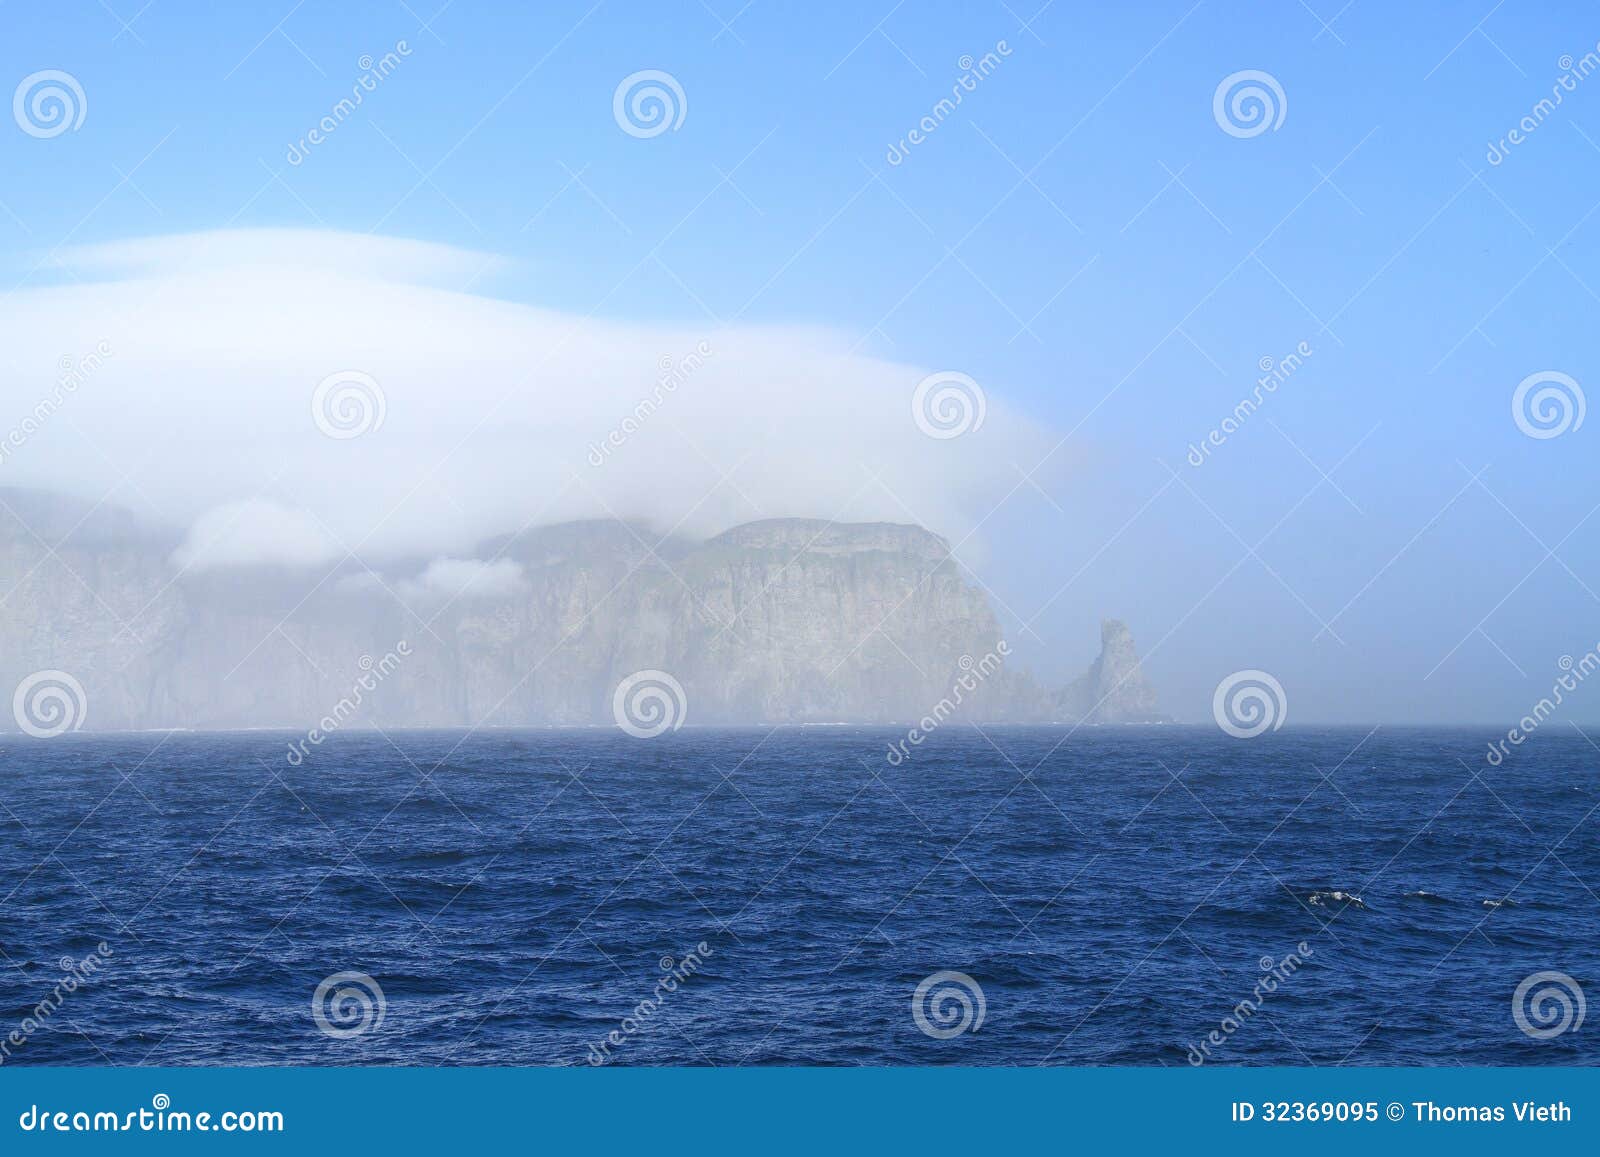 spitsbergen/bear island: cloud-covered cape